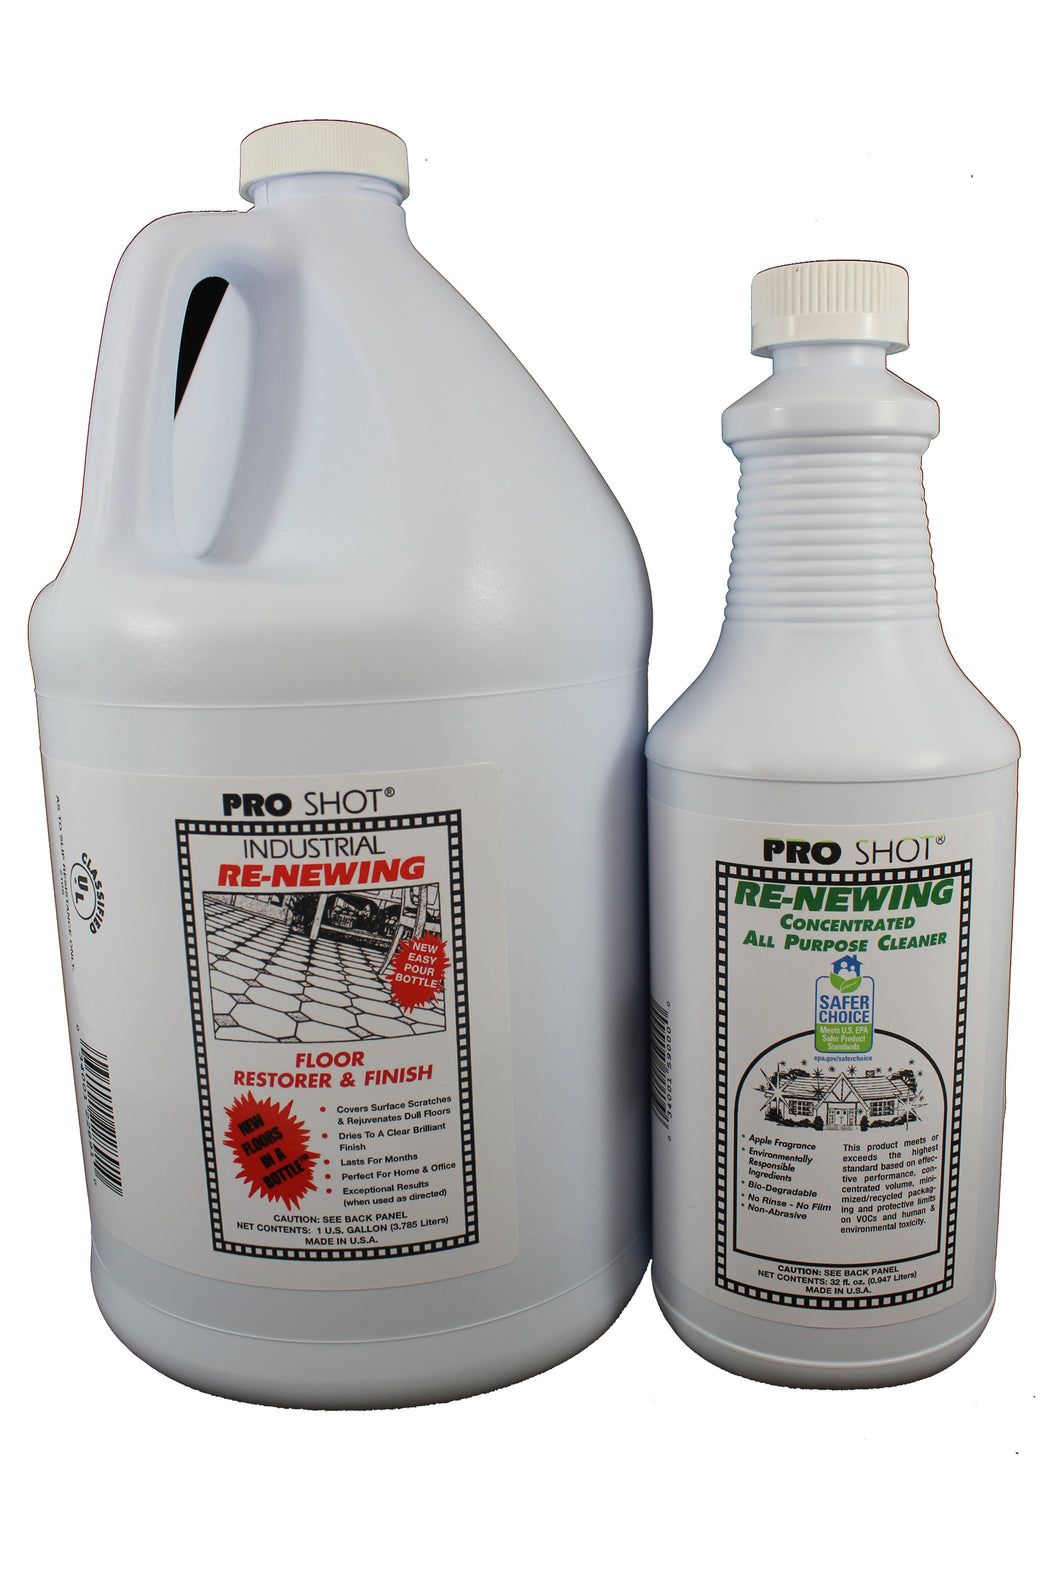 PRO SHOT® Floor Restorer & Finish 1 Gallon and PRO SHOT All Purpose Cleaner Image